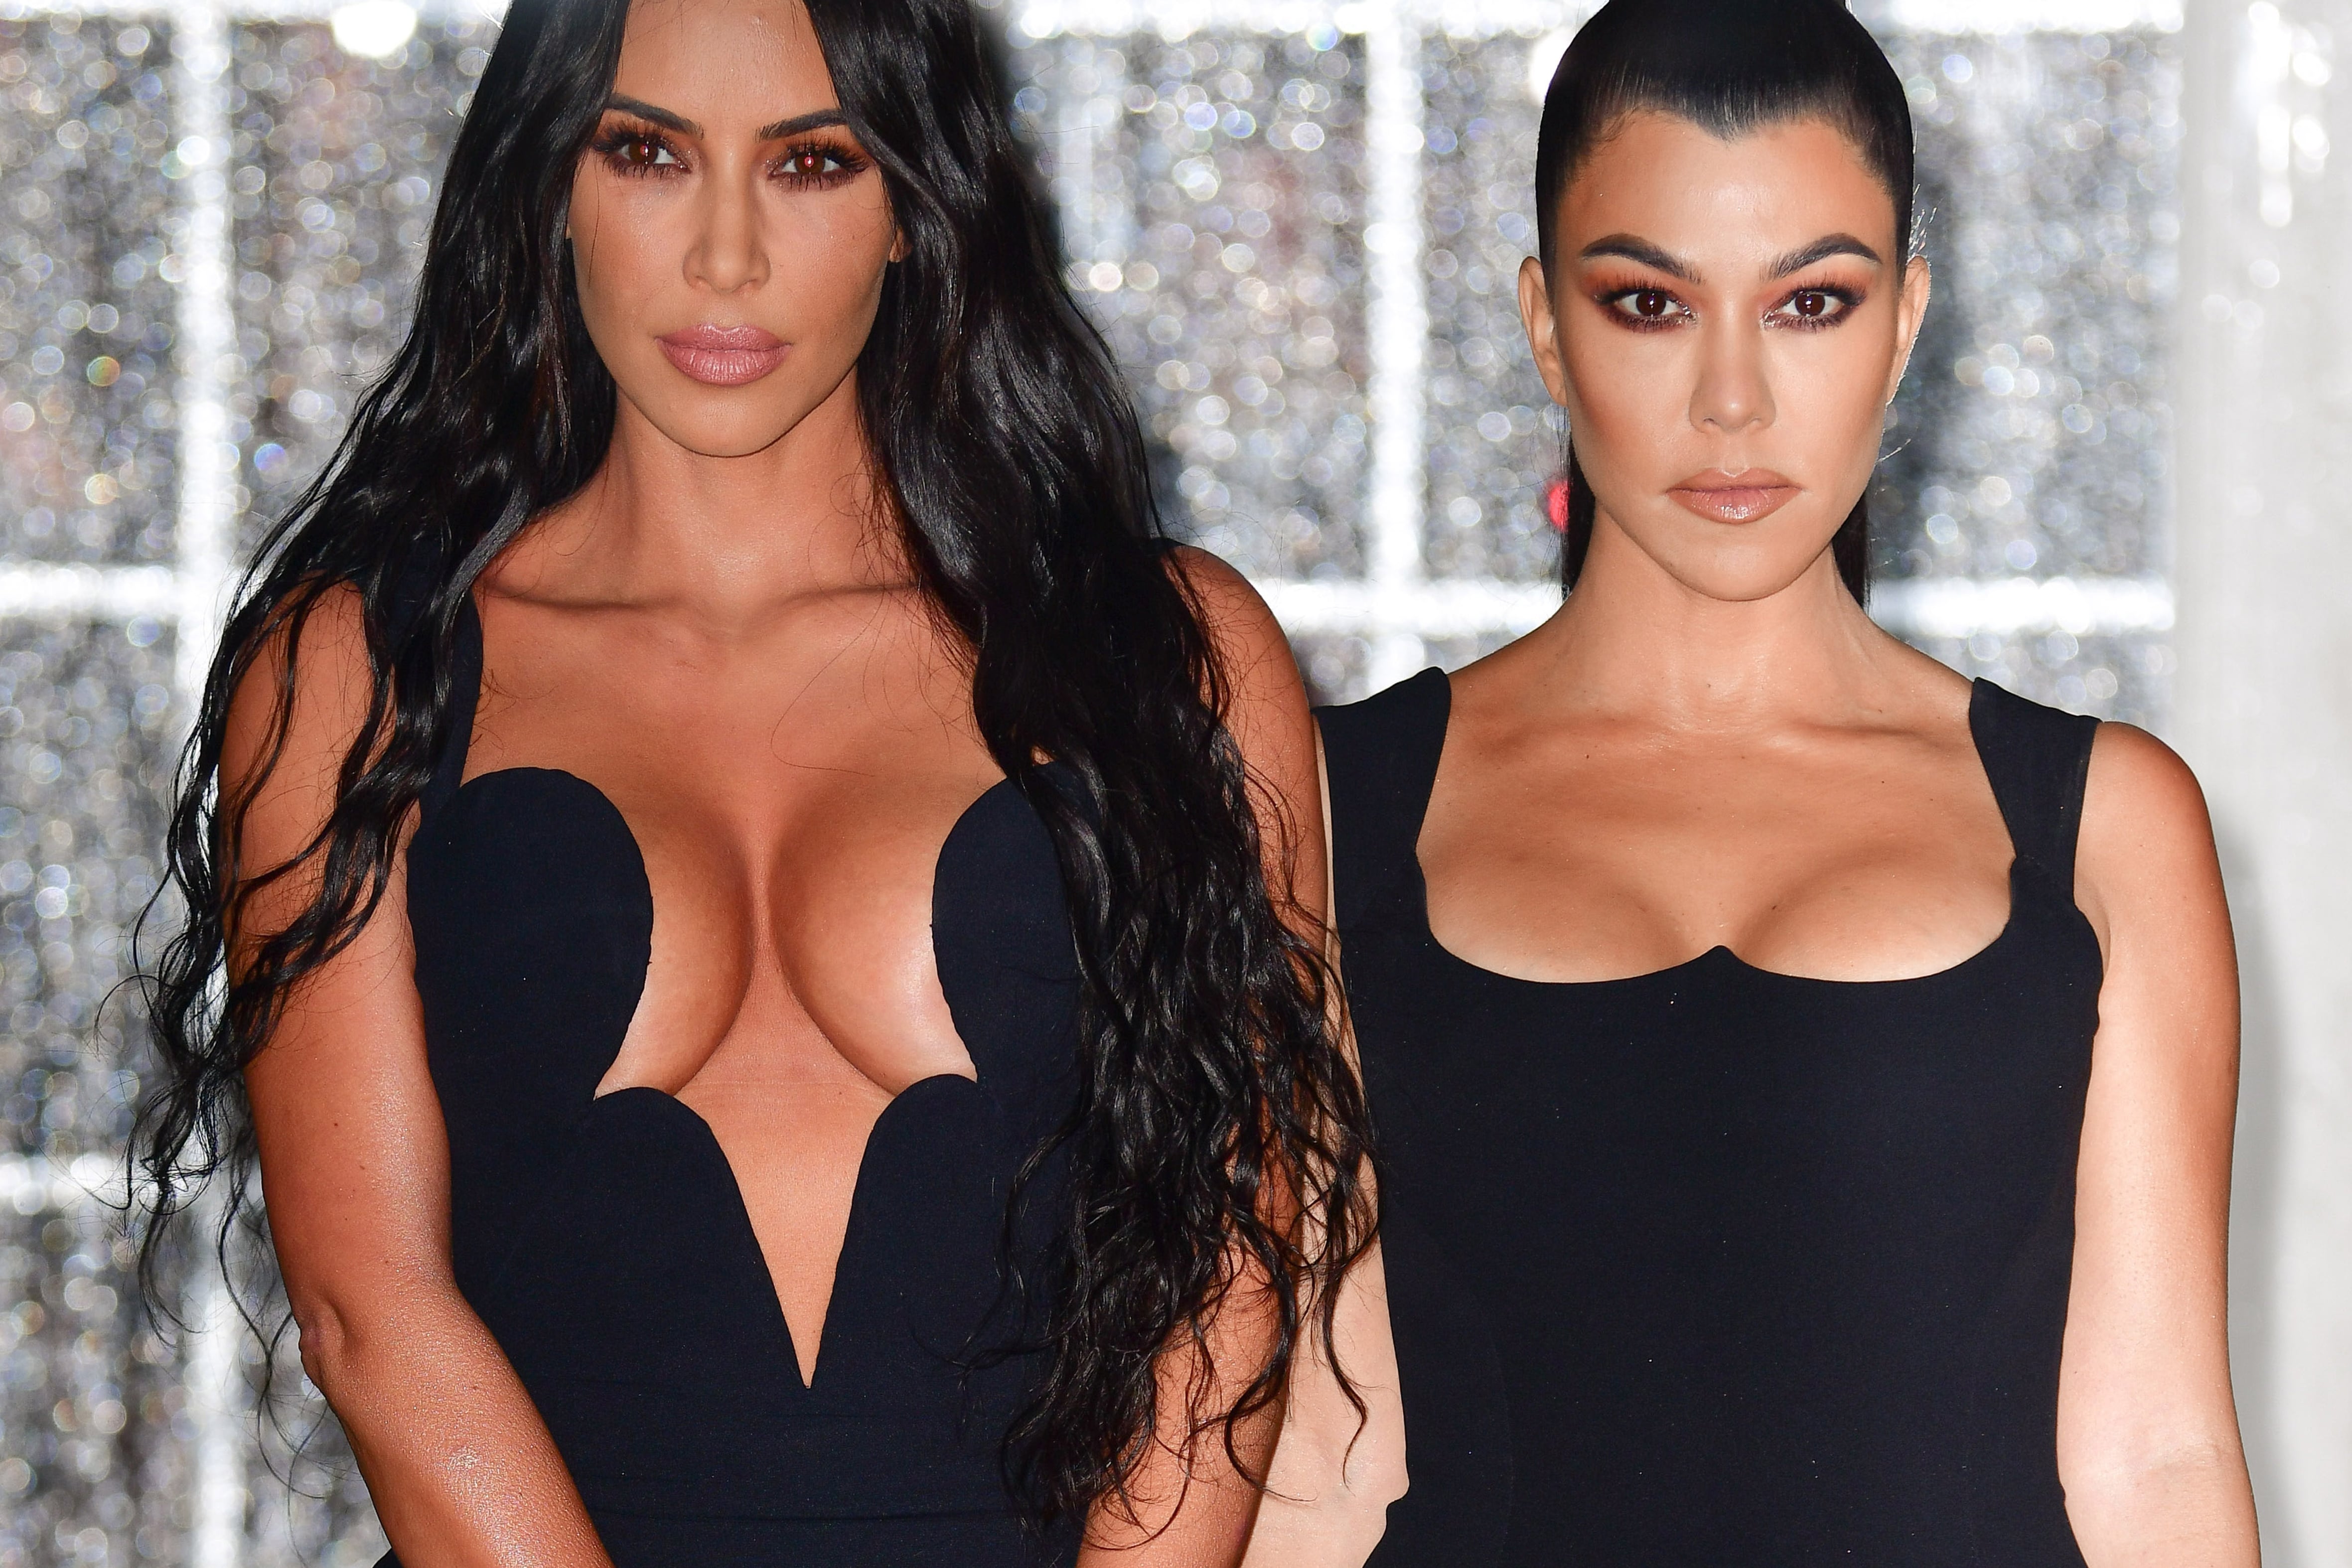 Kim Kardashian Calls Sister Kourtney “Such a Hater” Amid Ongoing Feud